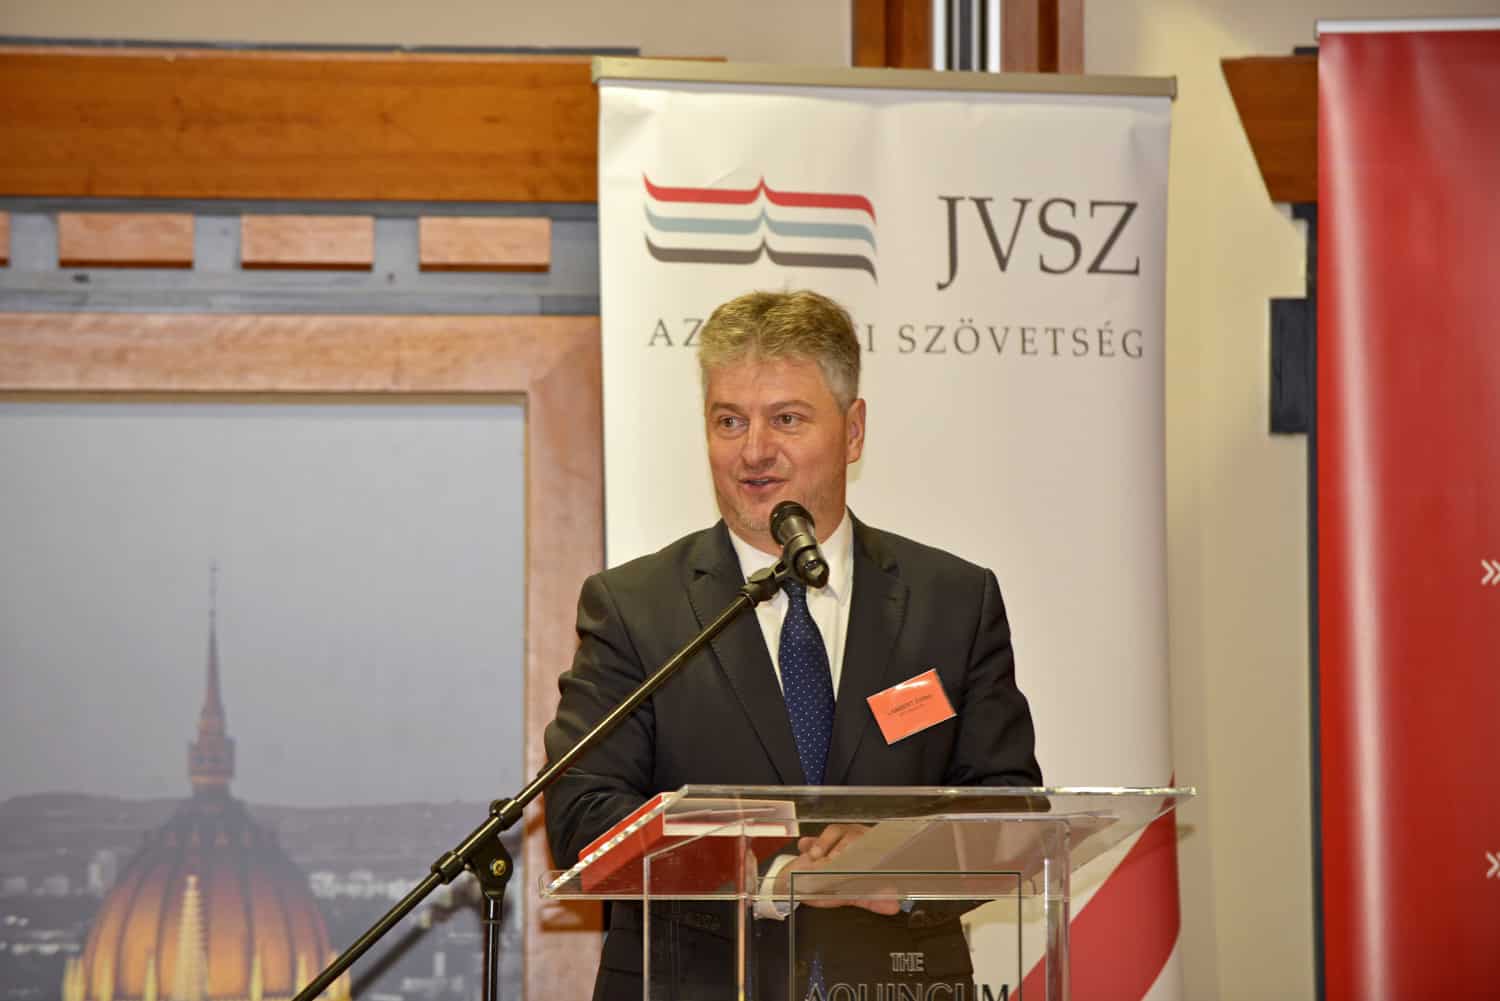 Zoltán Lambert, managing partner of WTS Klient Hungary